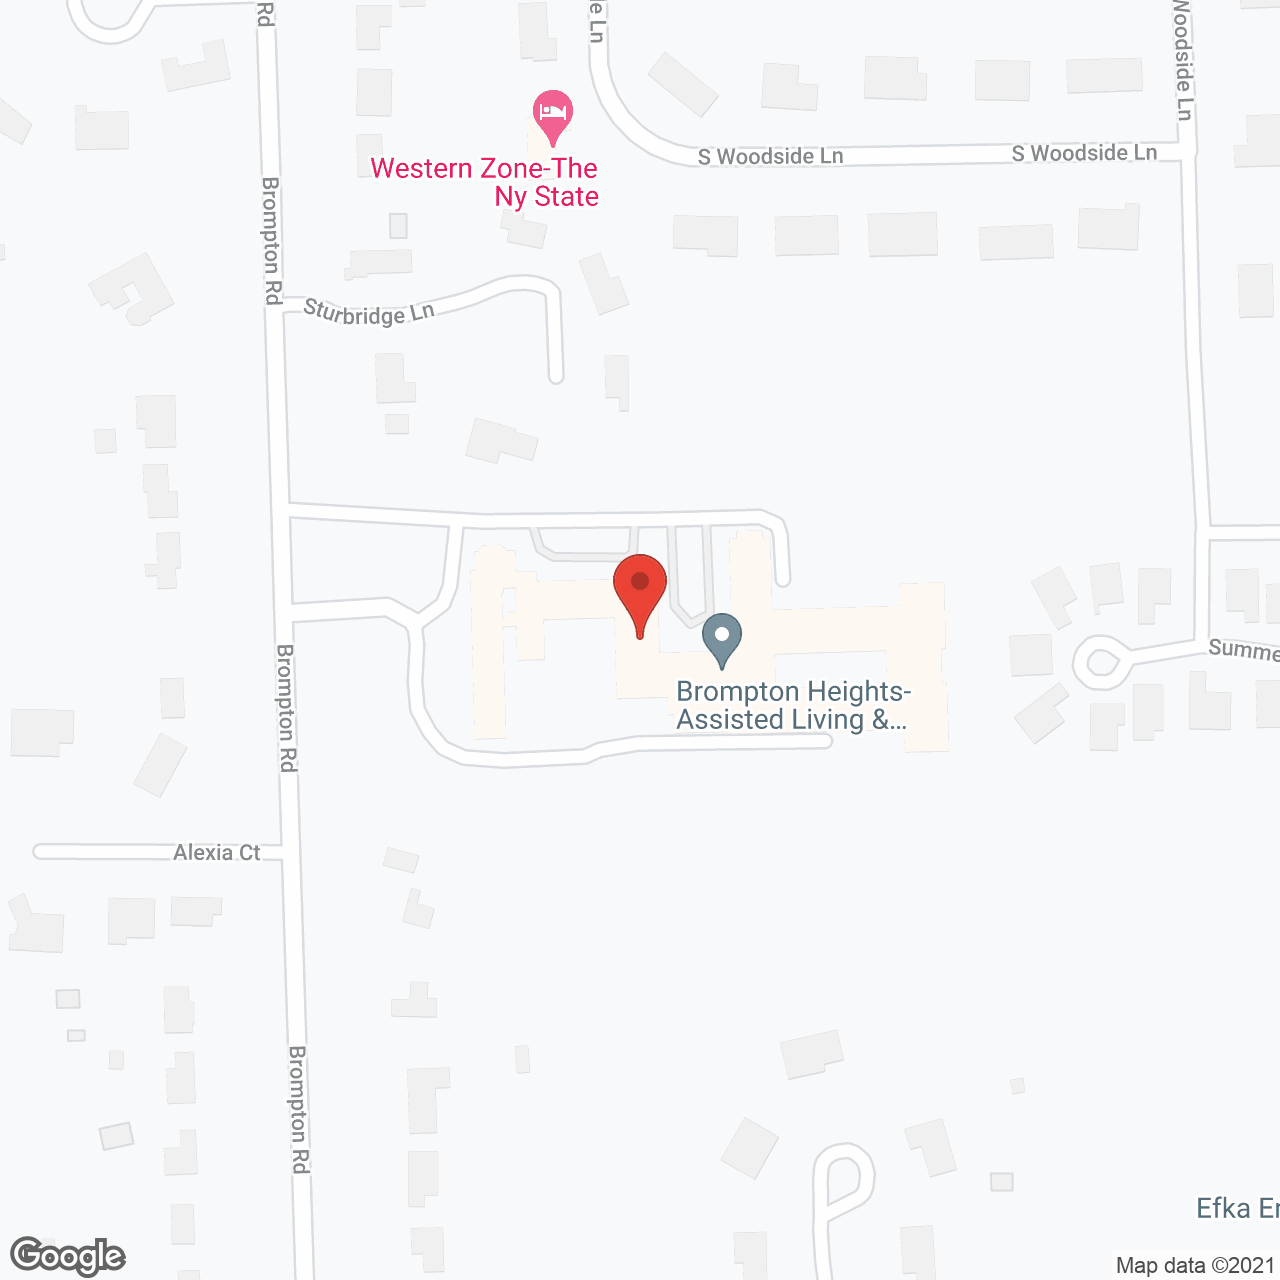 Brompton Heights in google map